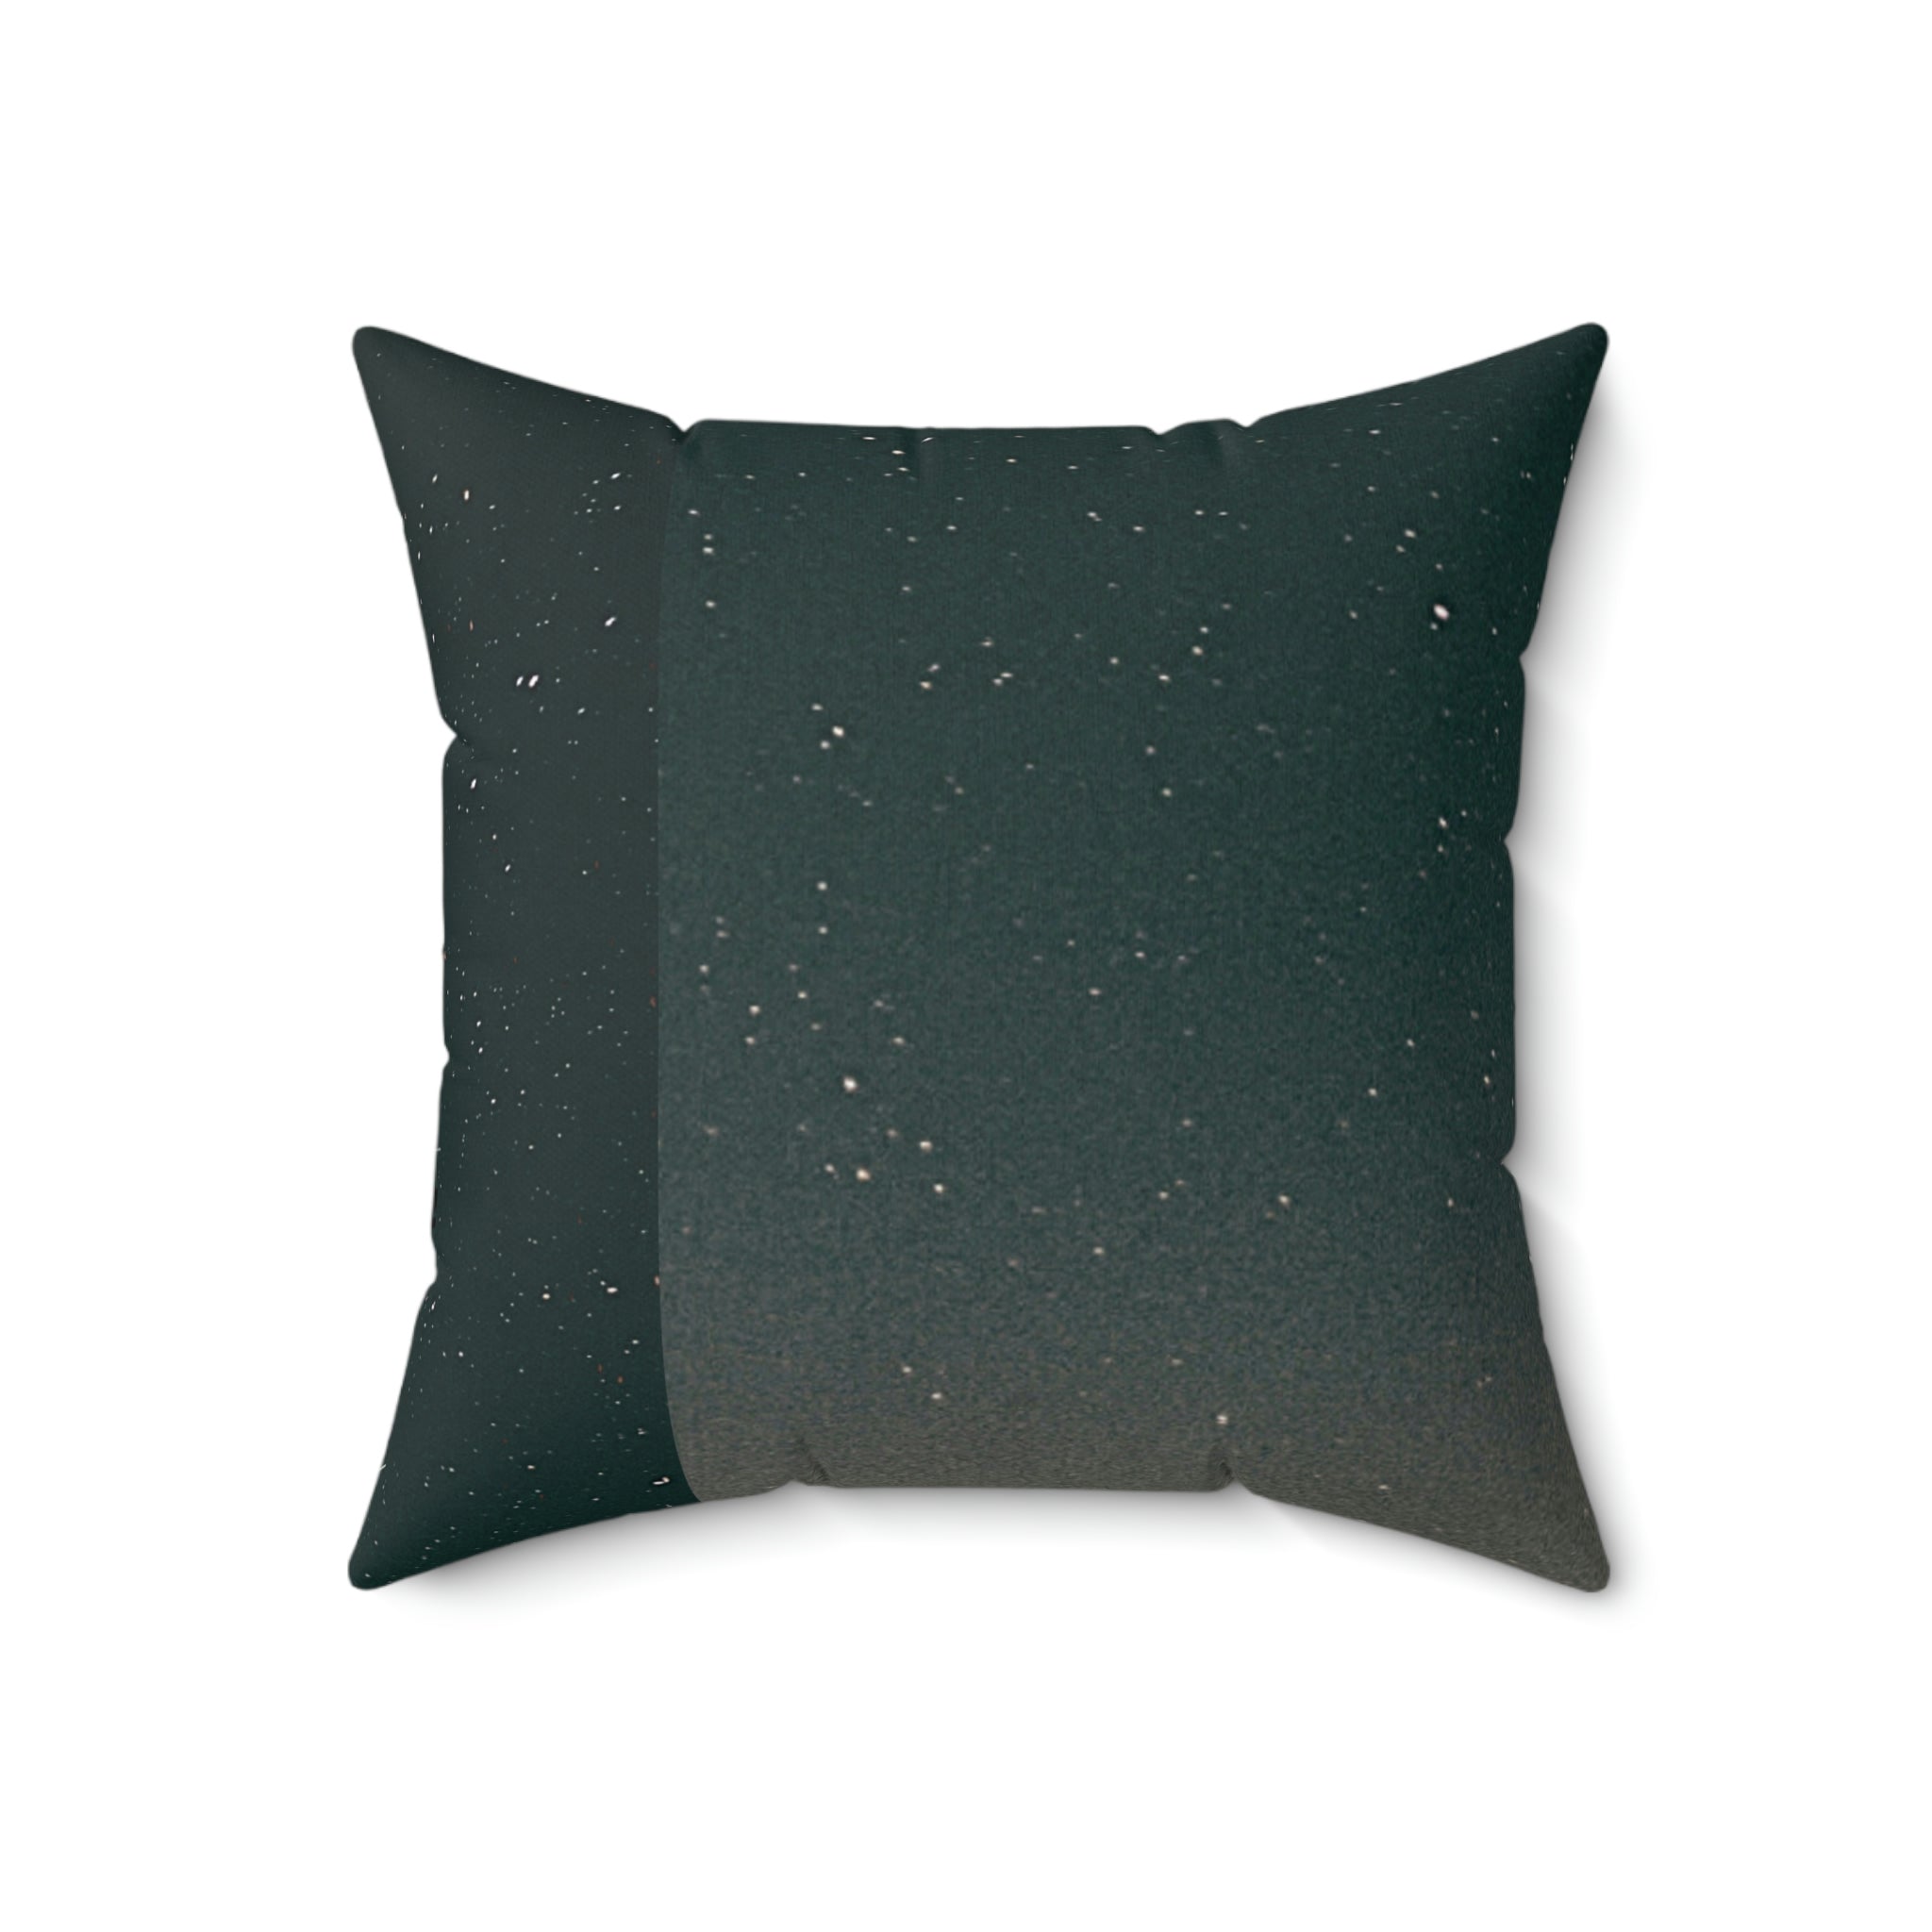 Reality/Spun Polyester Square Pillow